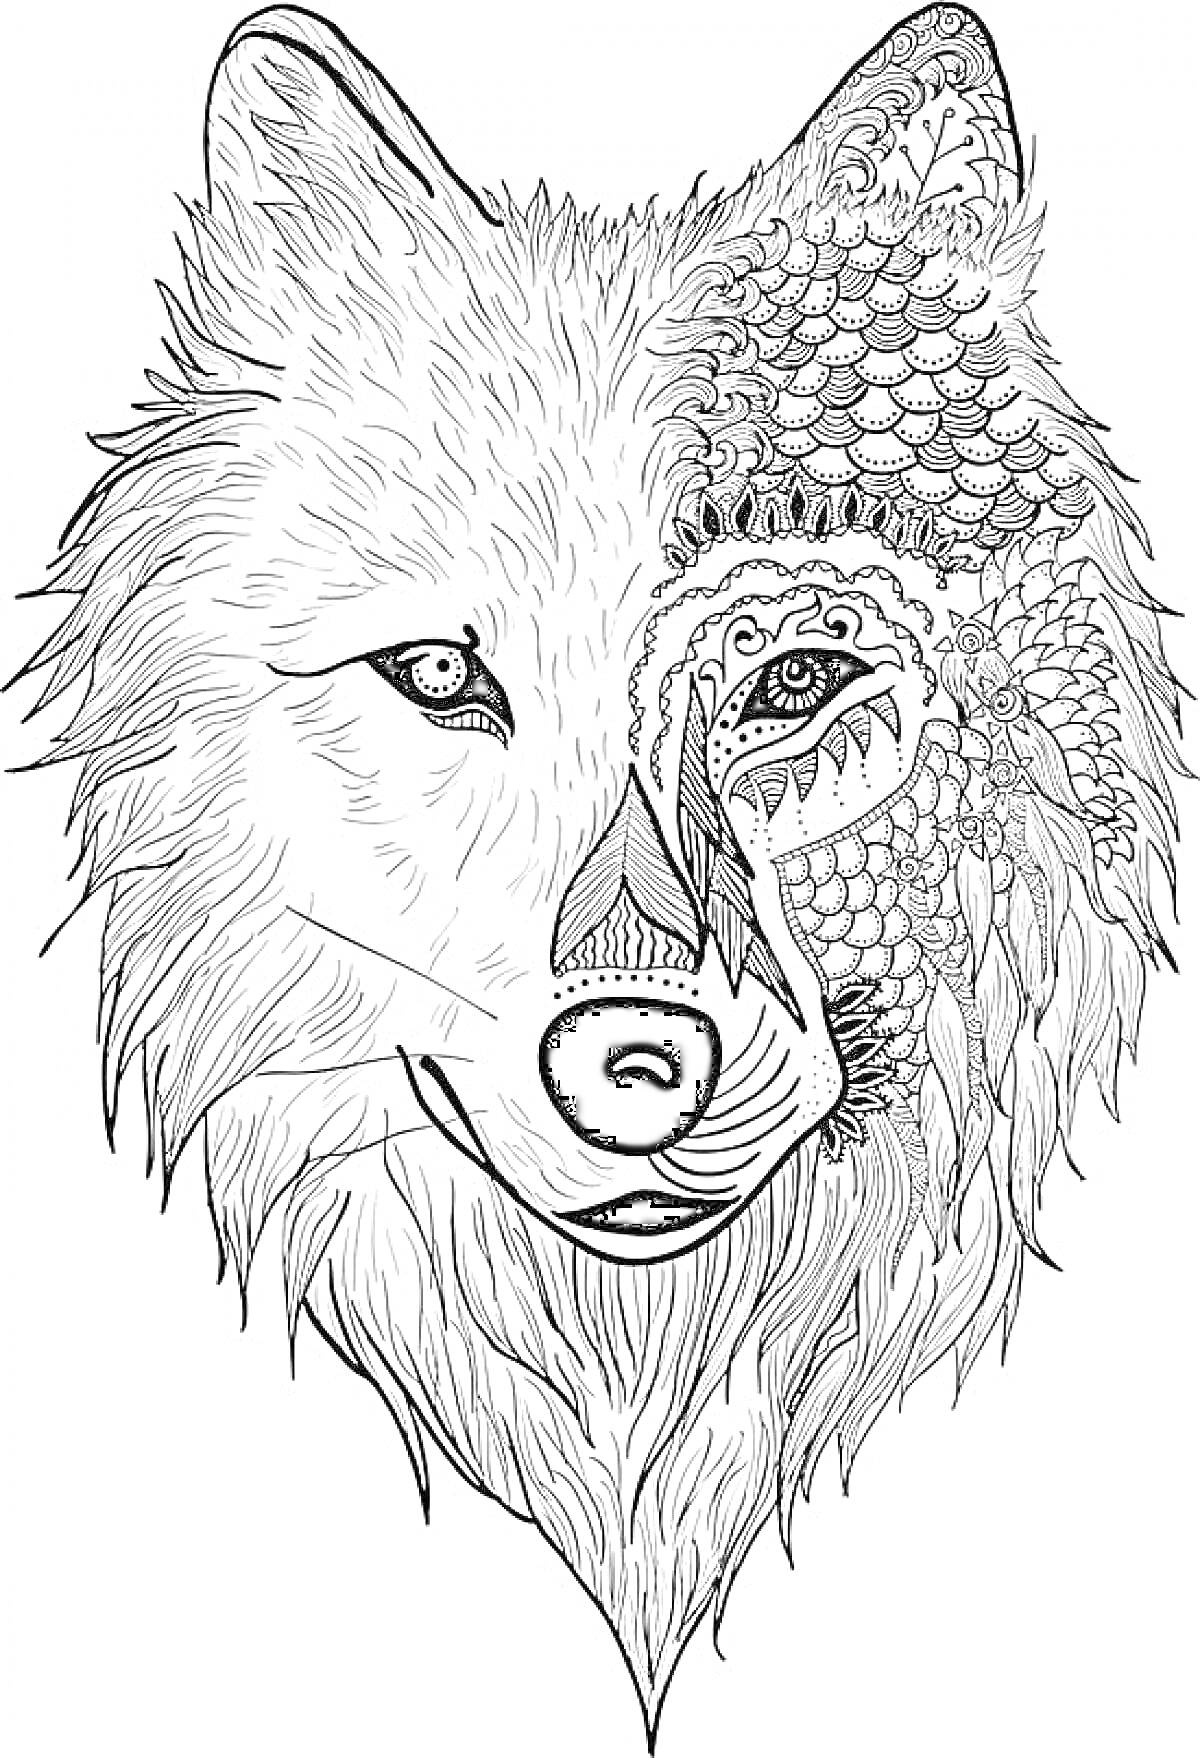 Контурное изображение волка с узорами на половине морды